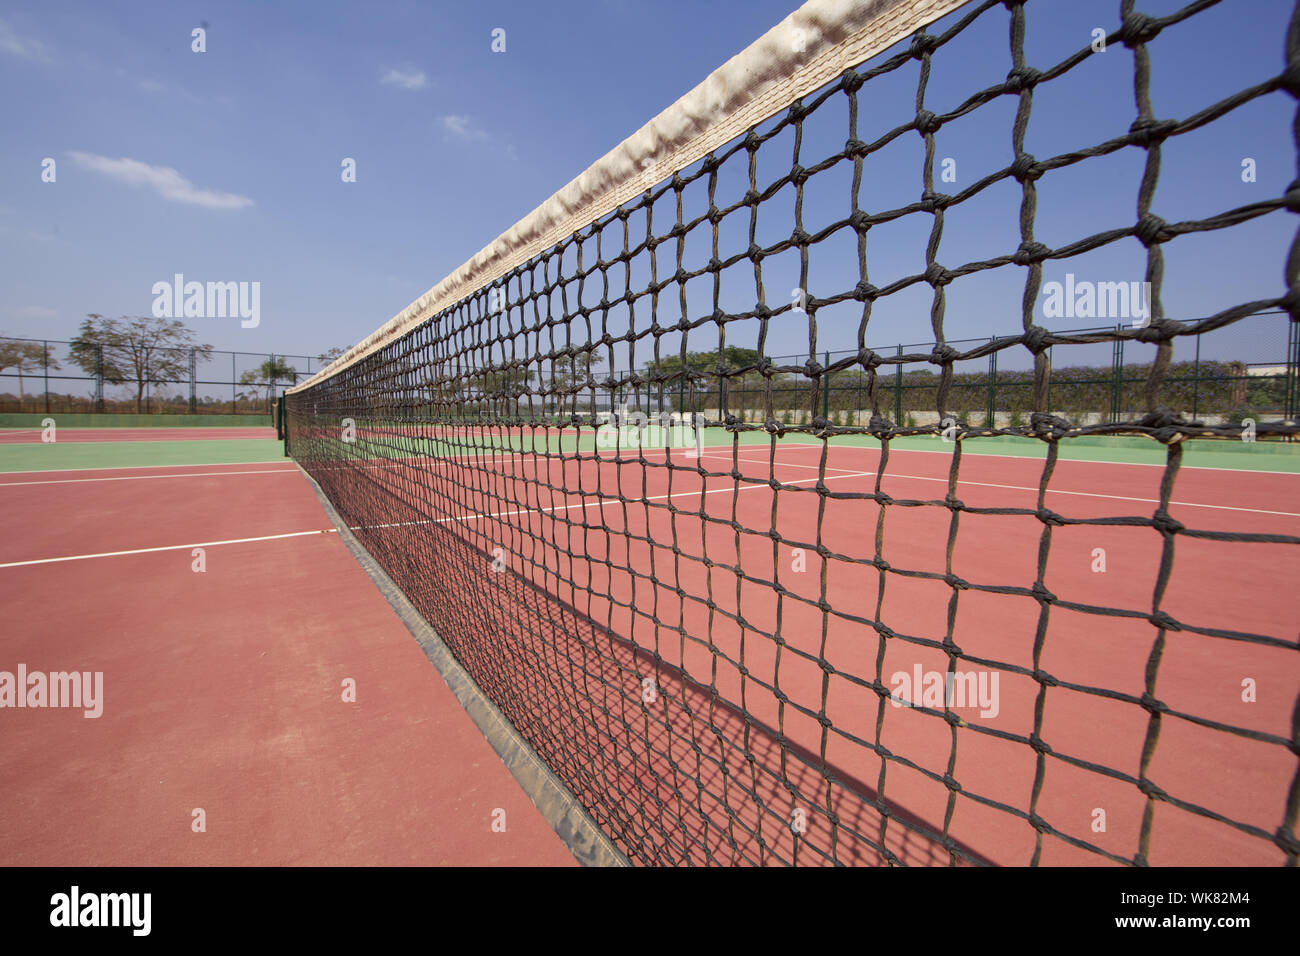 Tennis net in a tennis court Stock Photo